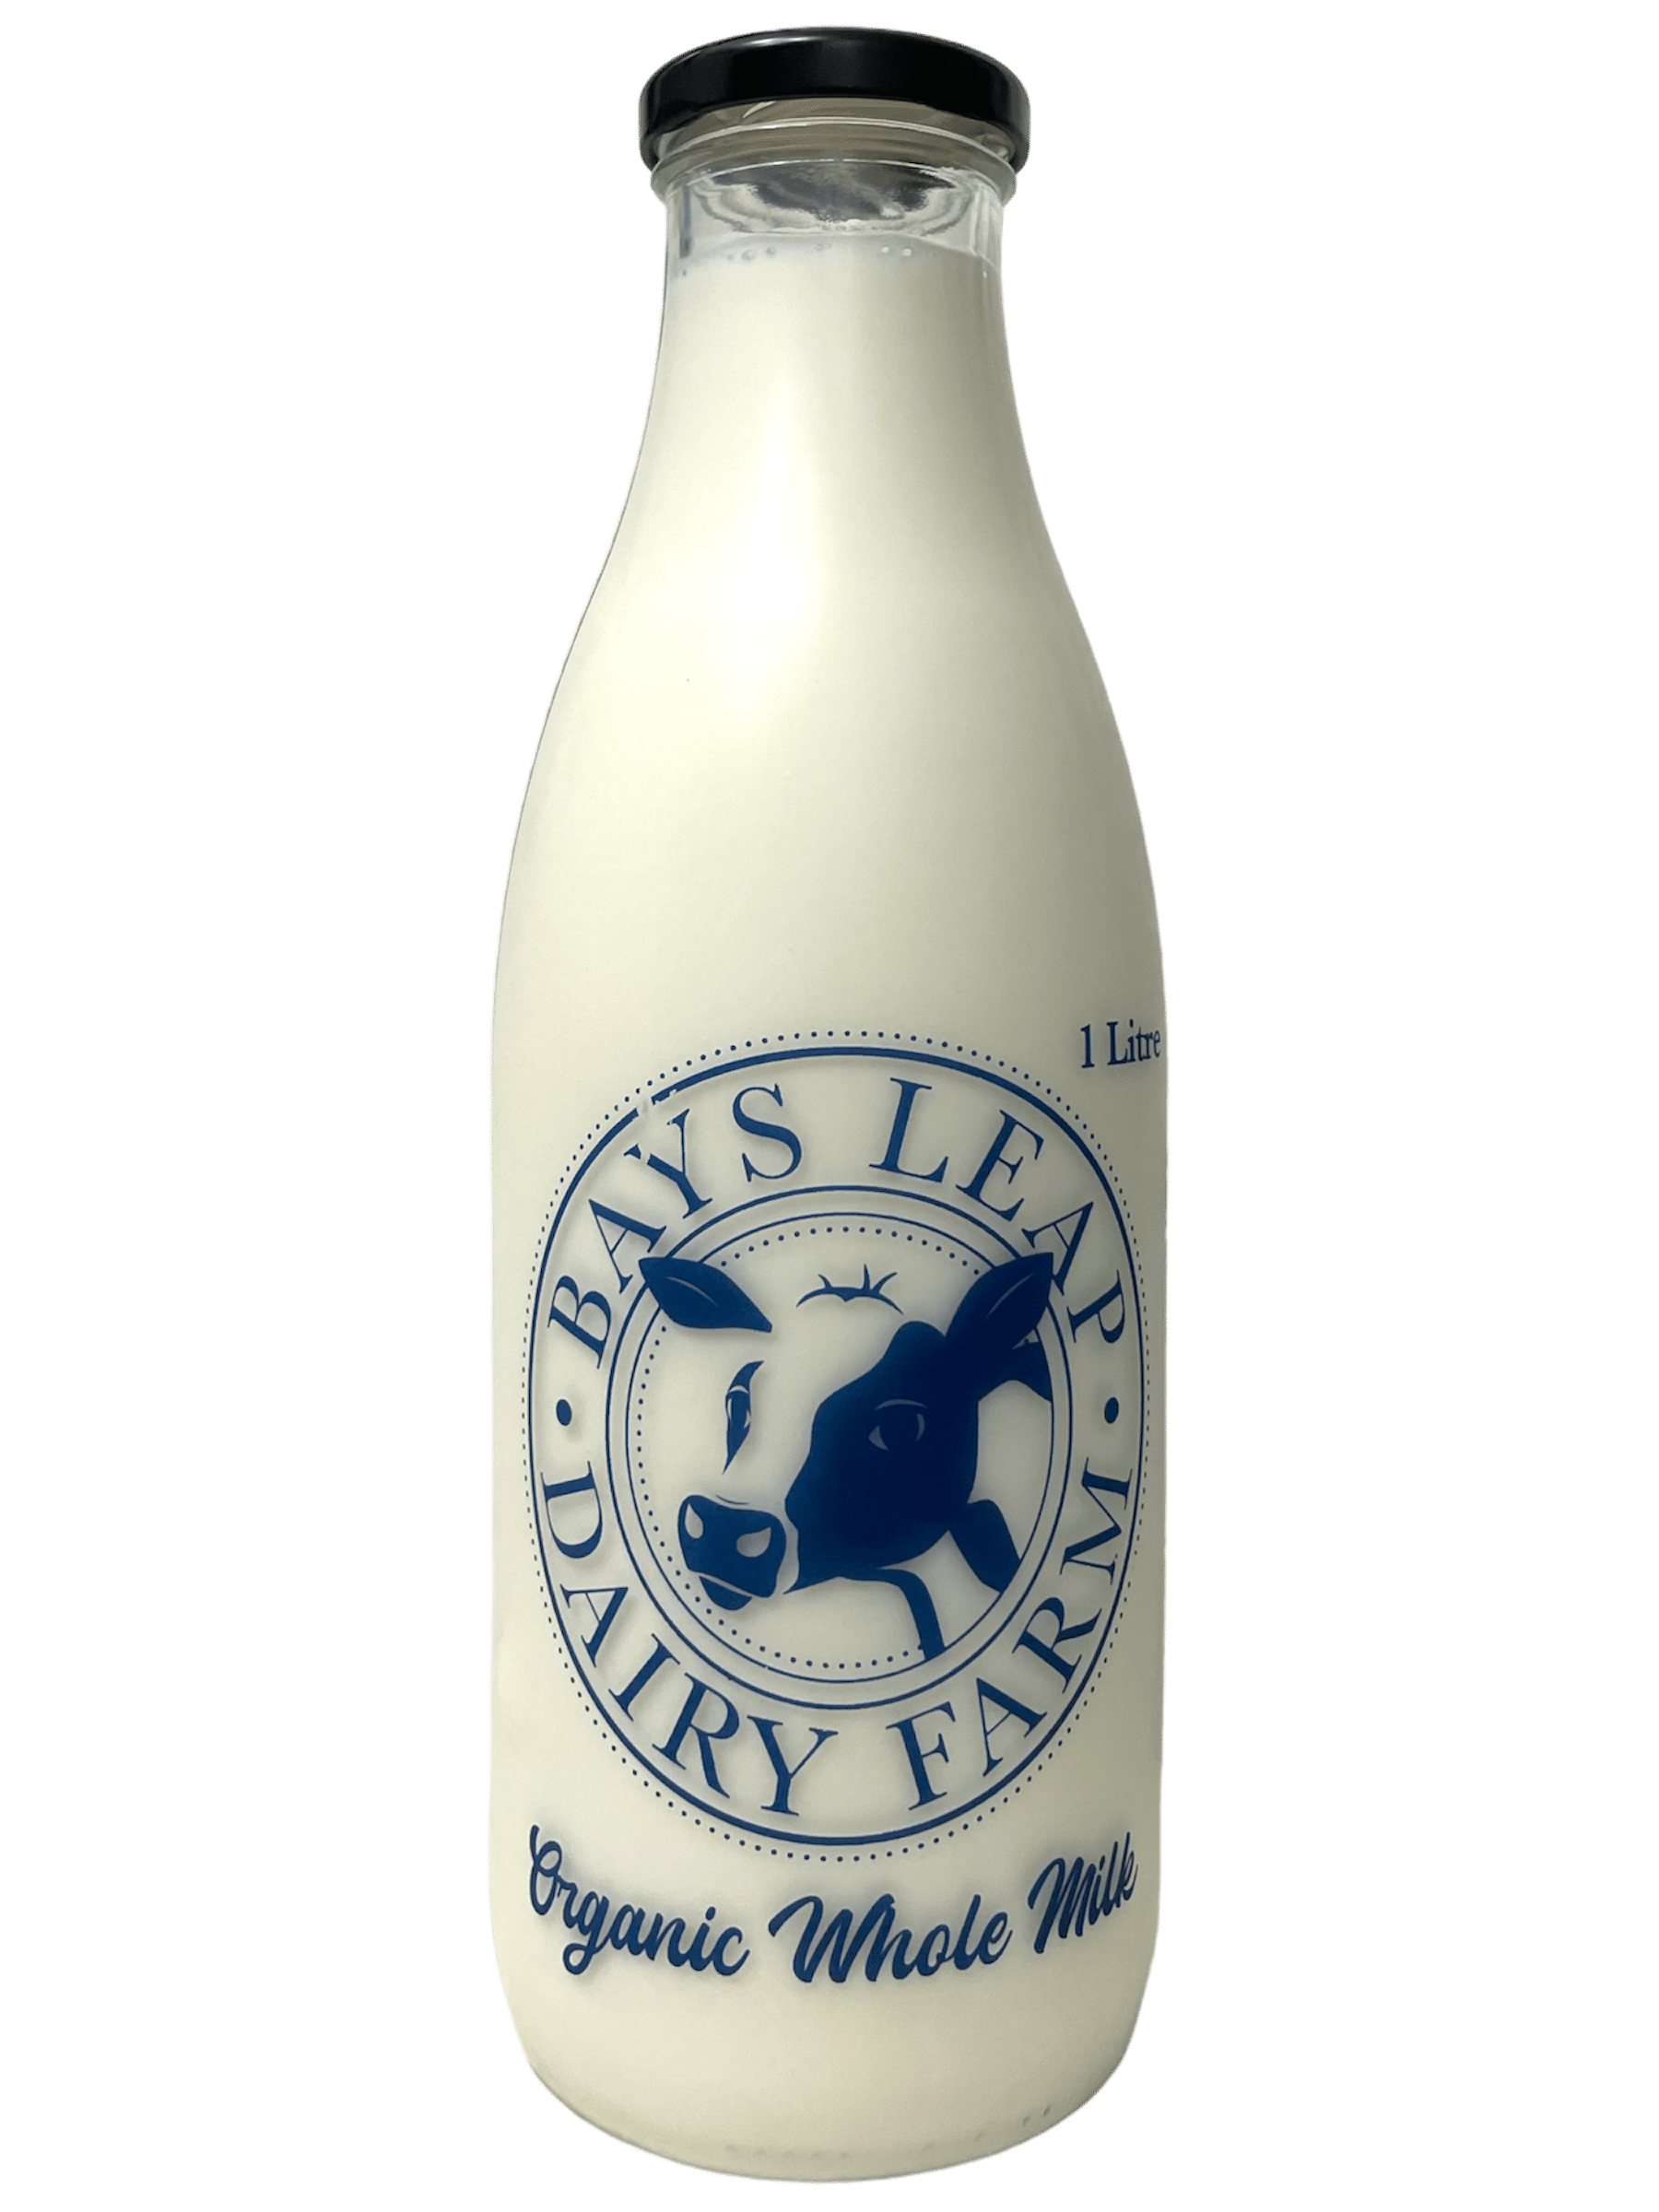 Bays Leap Dairy Farm - www.Kelis.info #KelisTheBottleBank